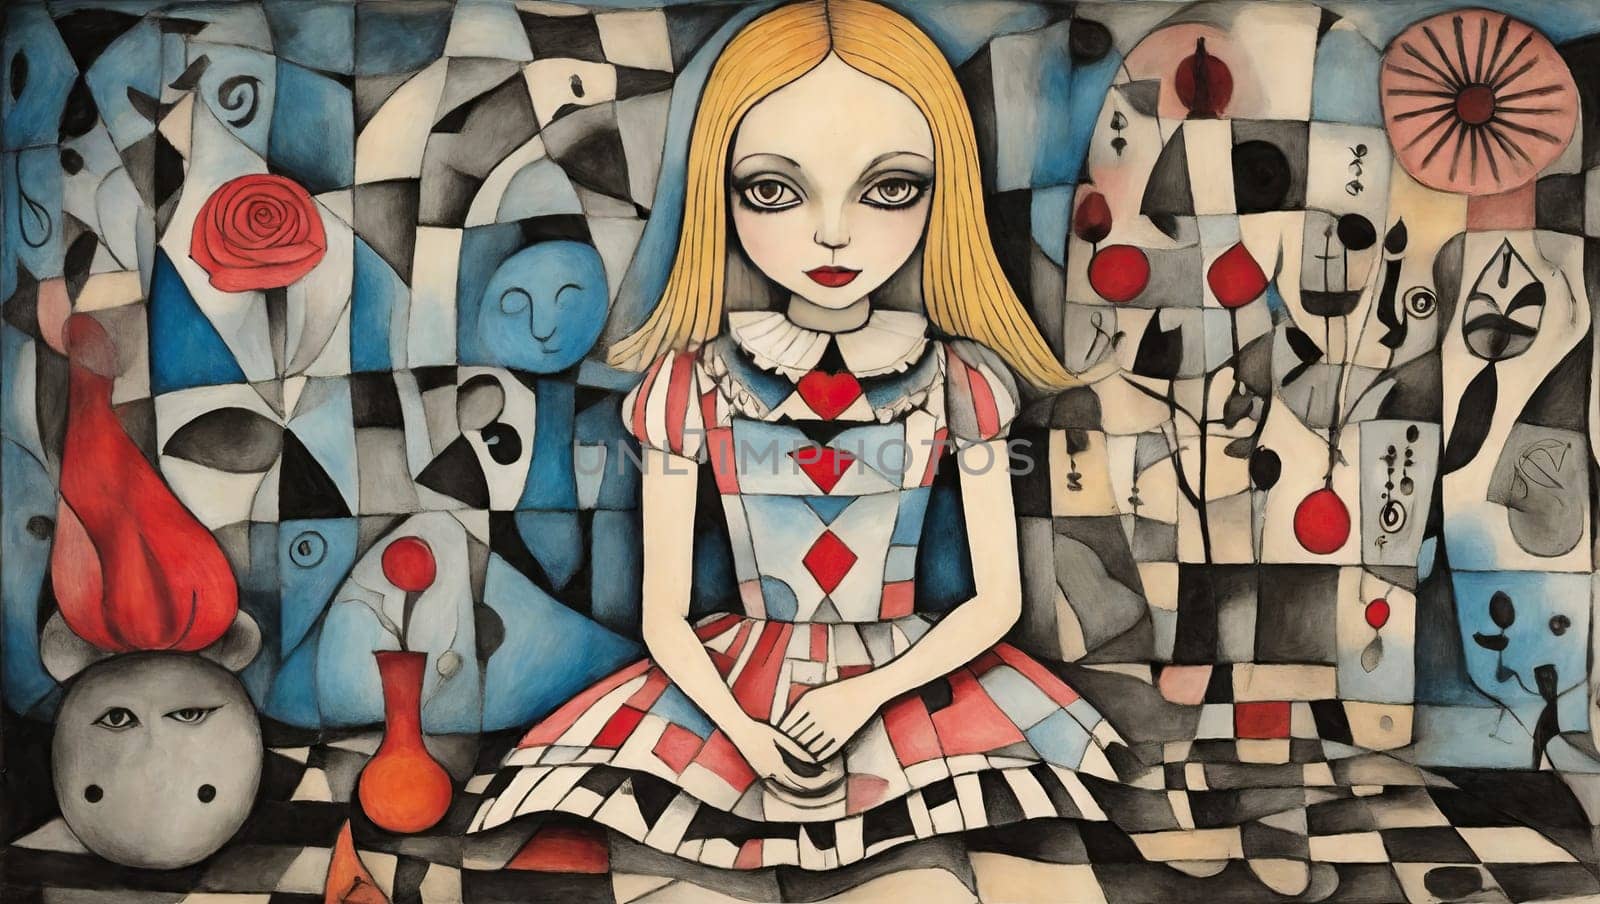 Emo beauty Alice in Wonderland in the style of Paul Klee by applesstock